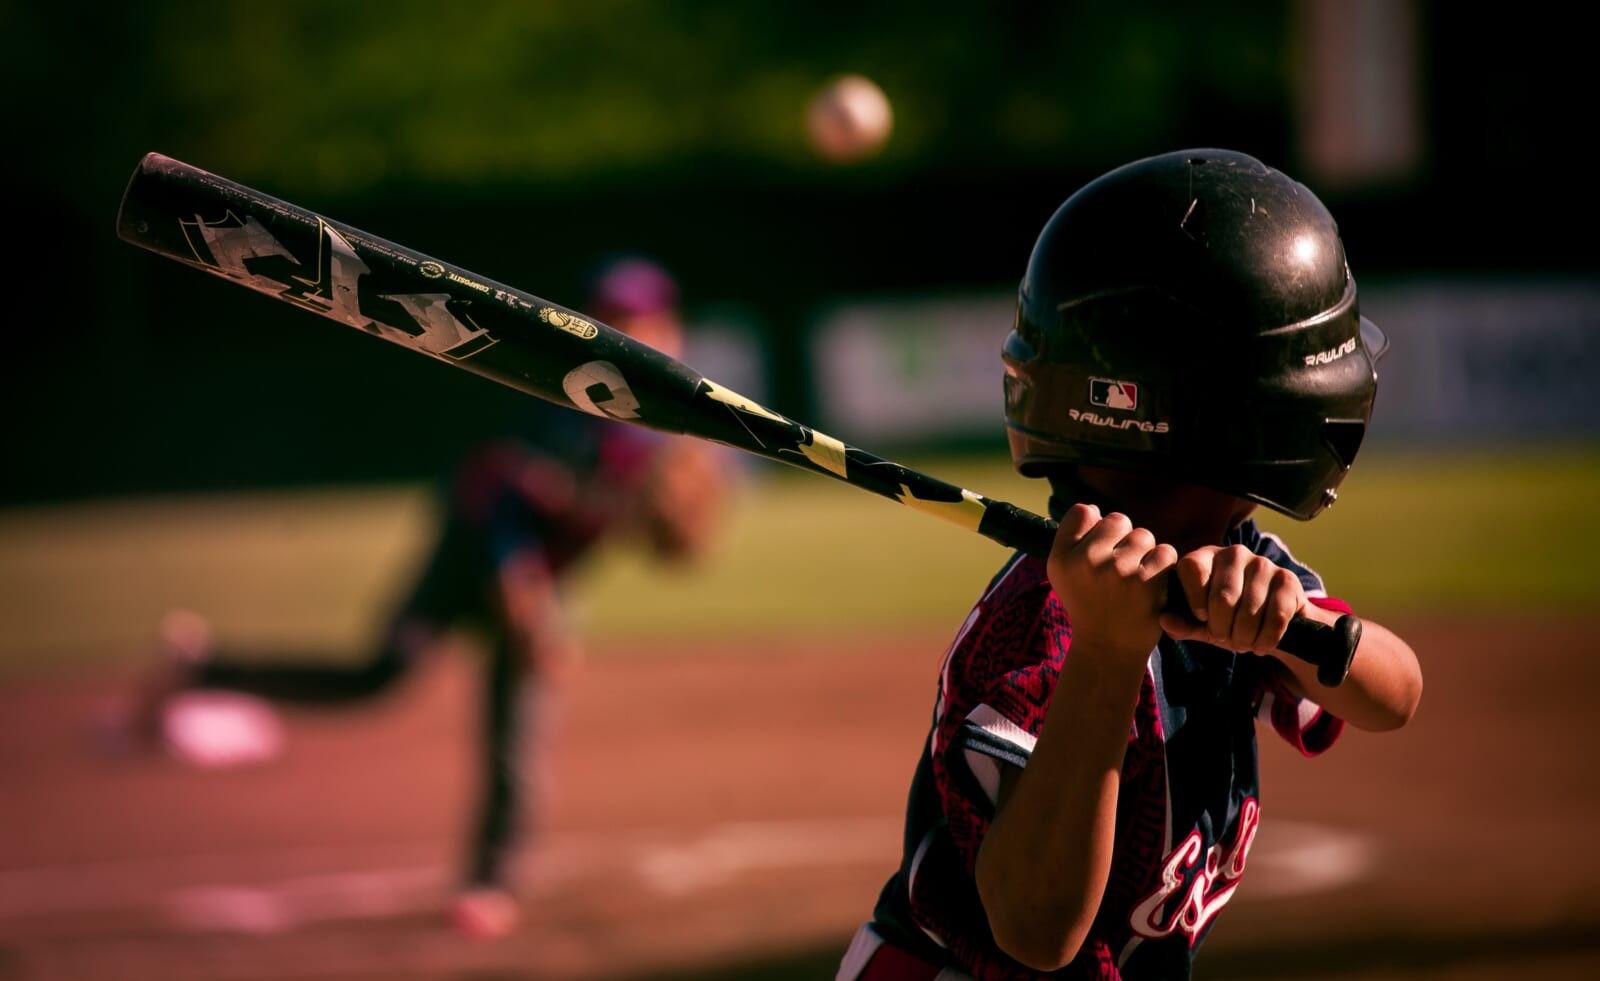 young kid plays baseball up to bat